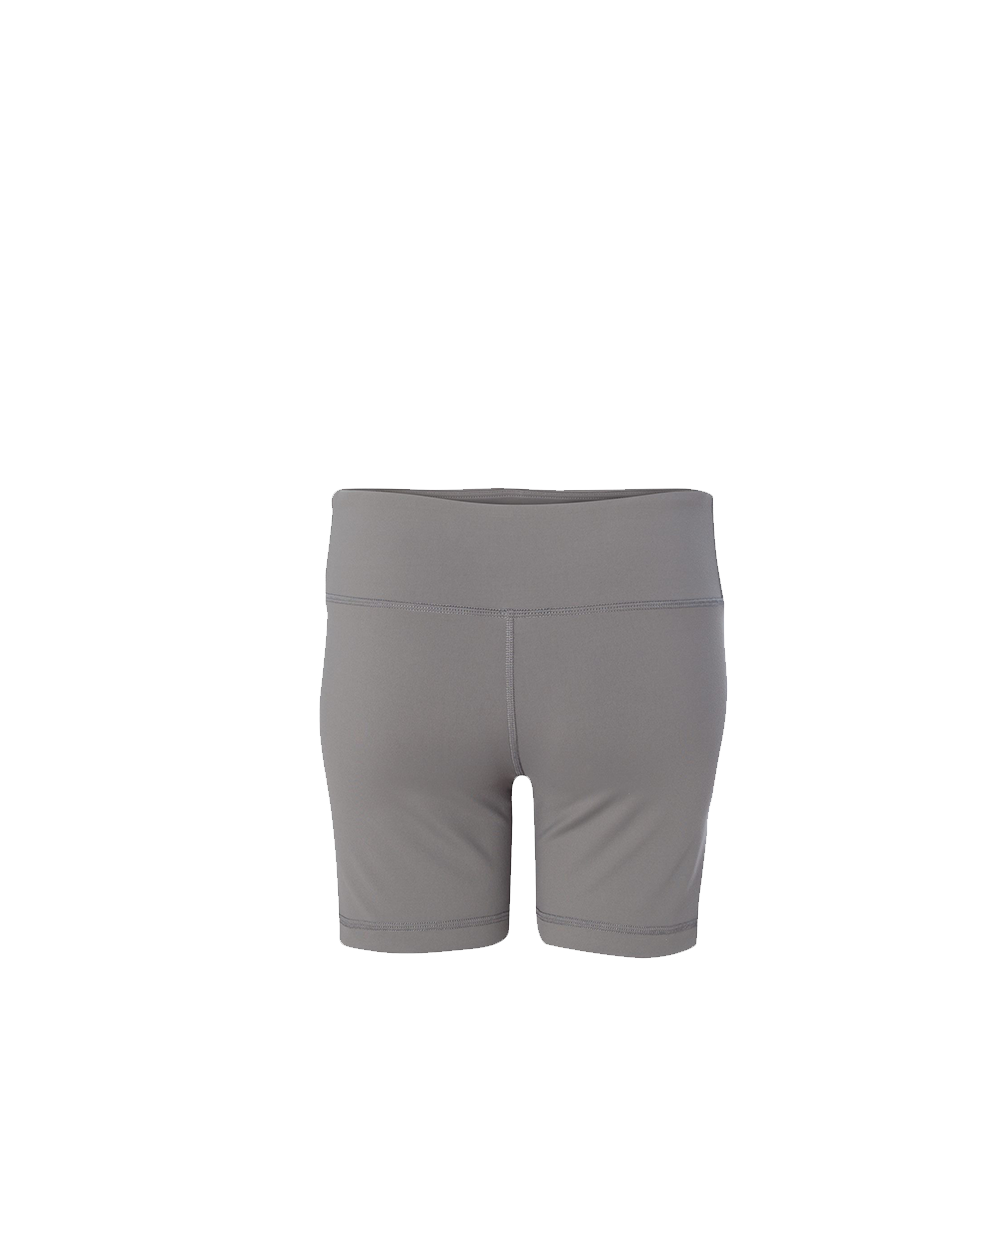 RKFD Femme Biker Shorts (Sport Grey)